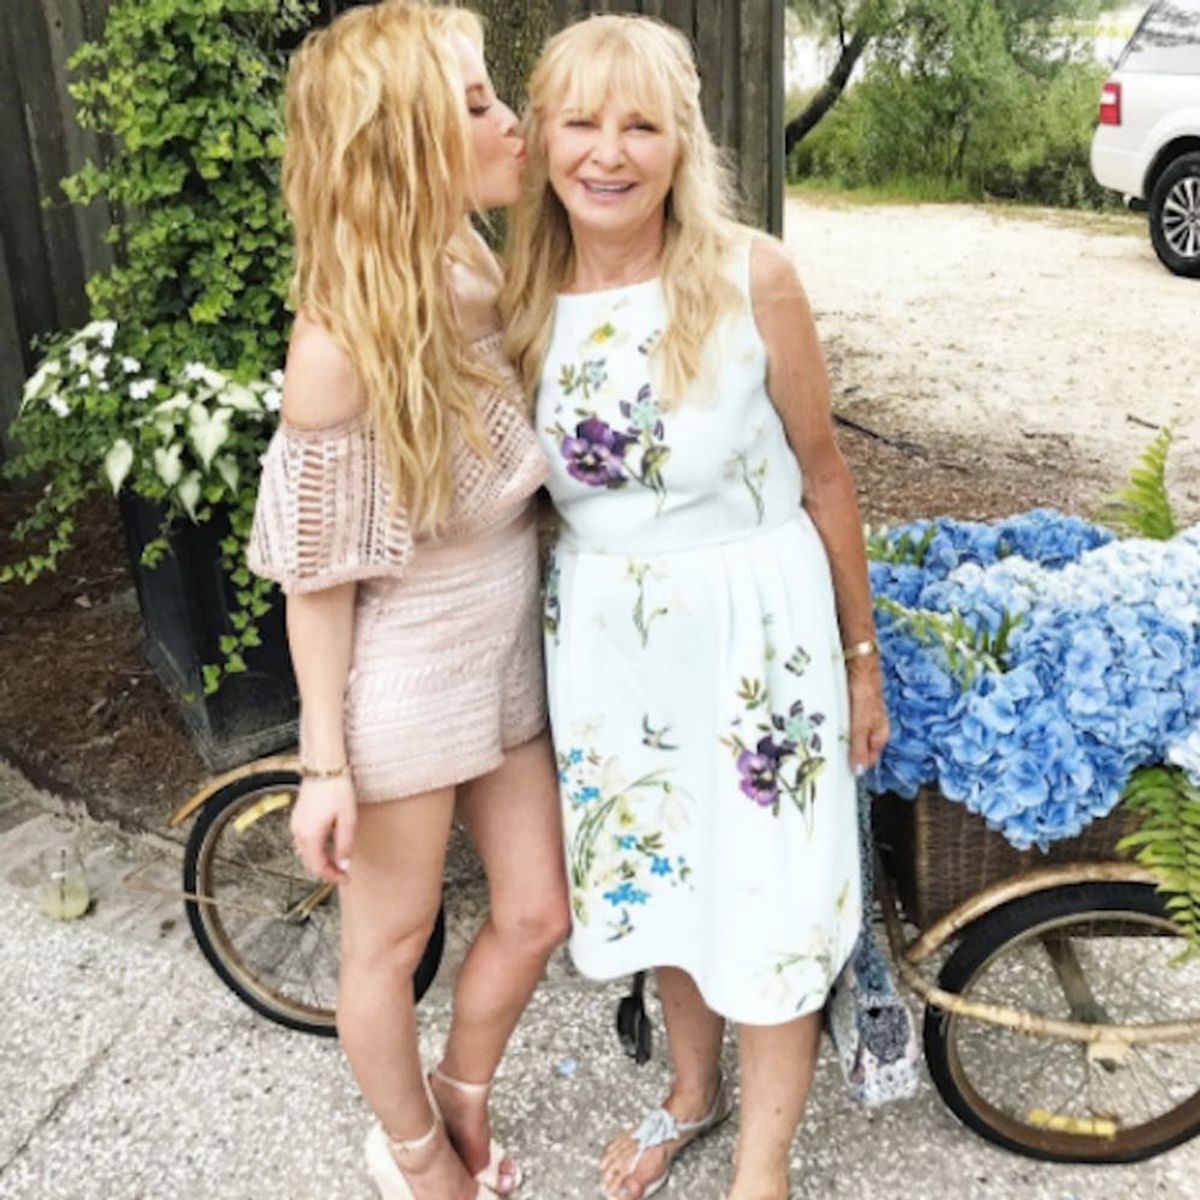 Tara Lipinski’s Mom Gave Her the Most Heartwarming Gift Ever on Her Big Wedding Day